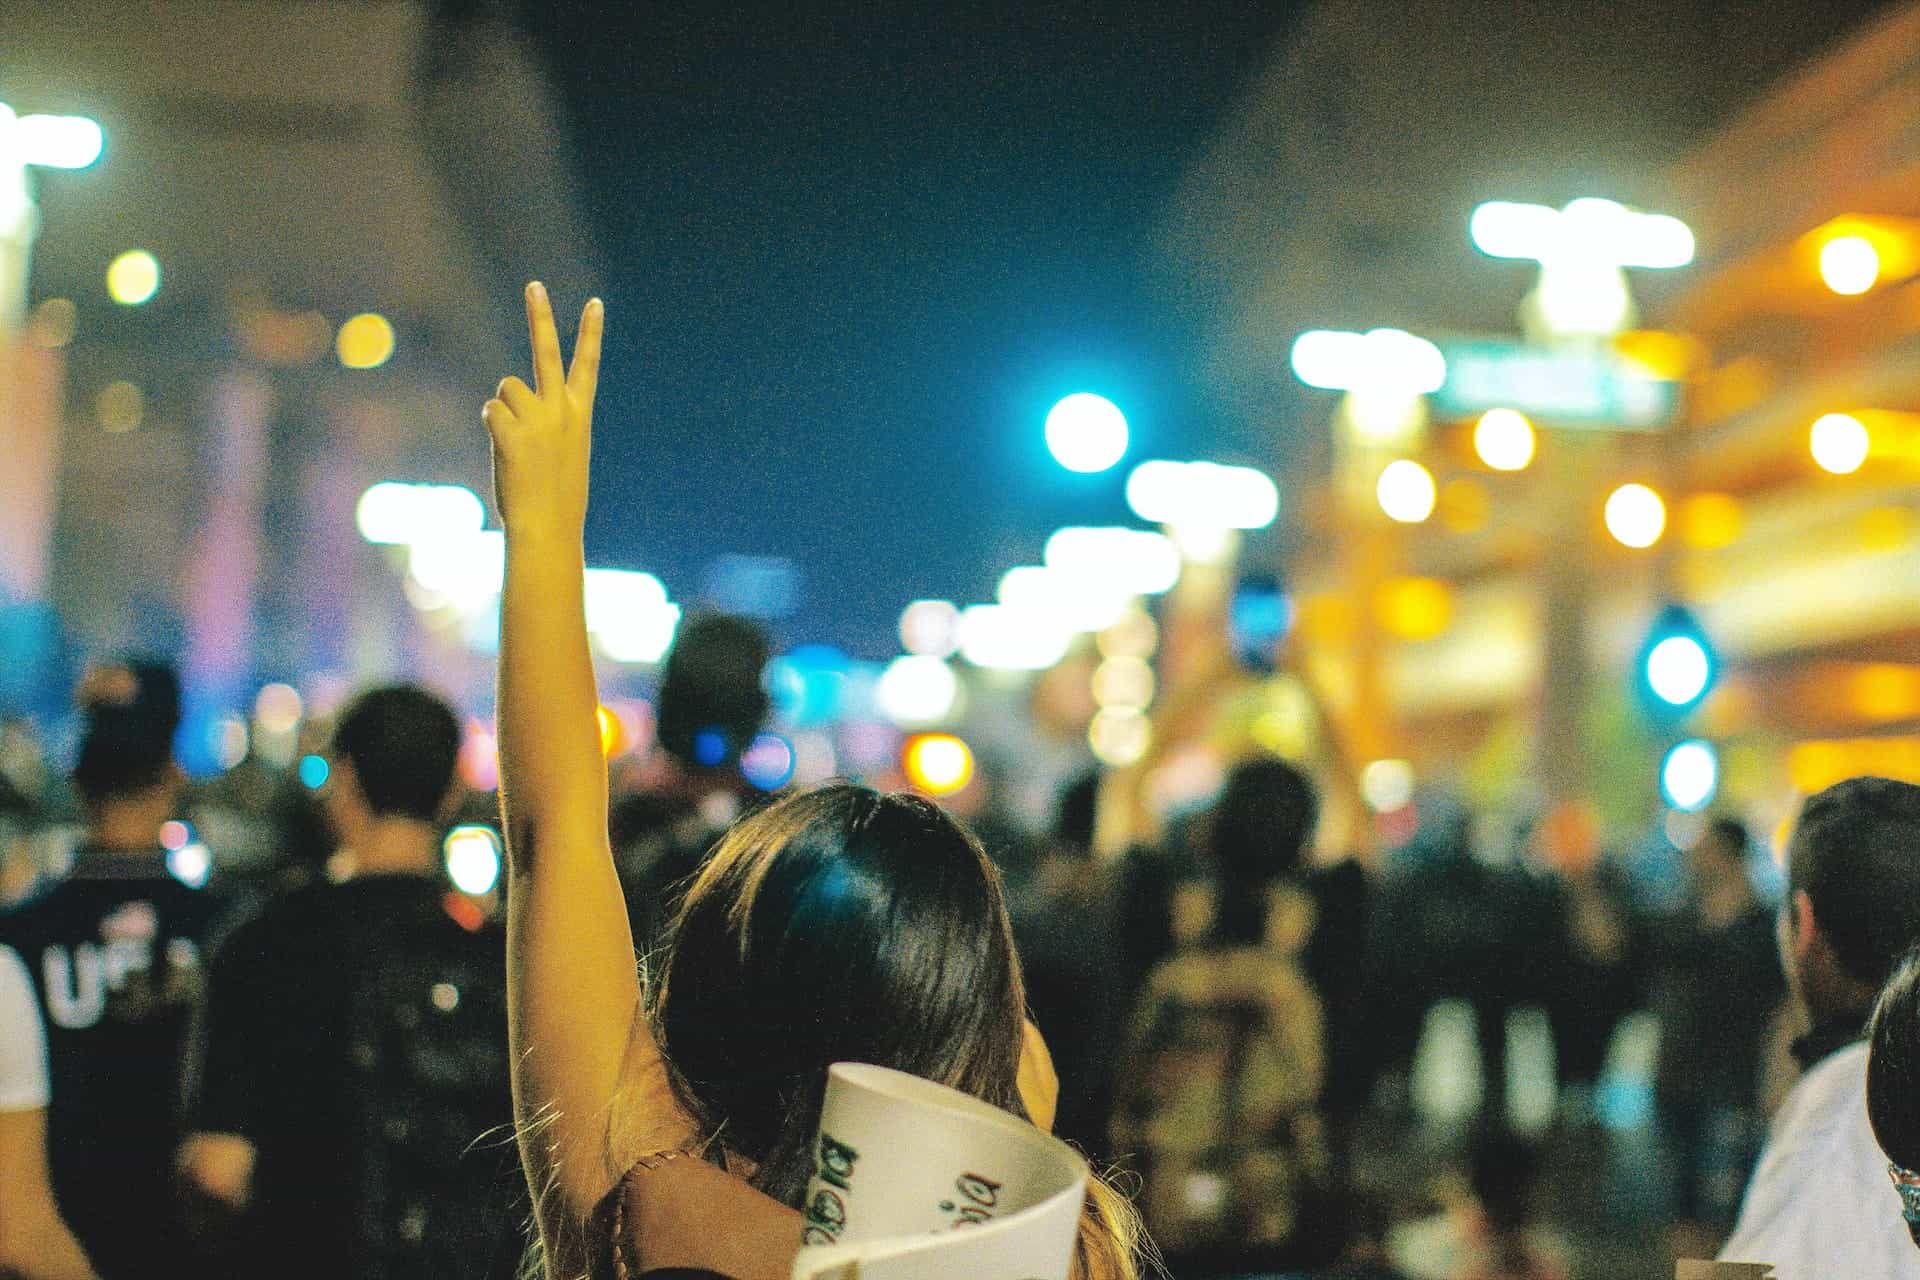 Dari belakang, seorang wanita mengangkat tangannya dengan tanda perdamaian dalam protes jalanan di malam hari.